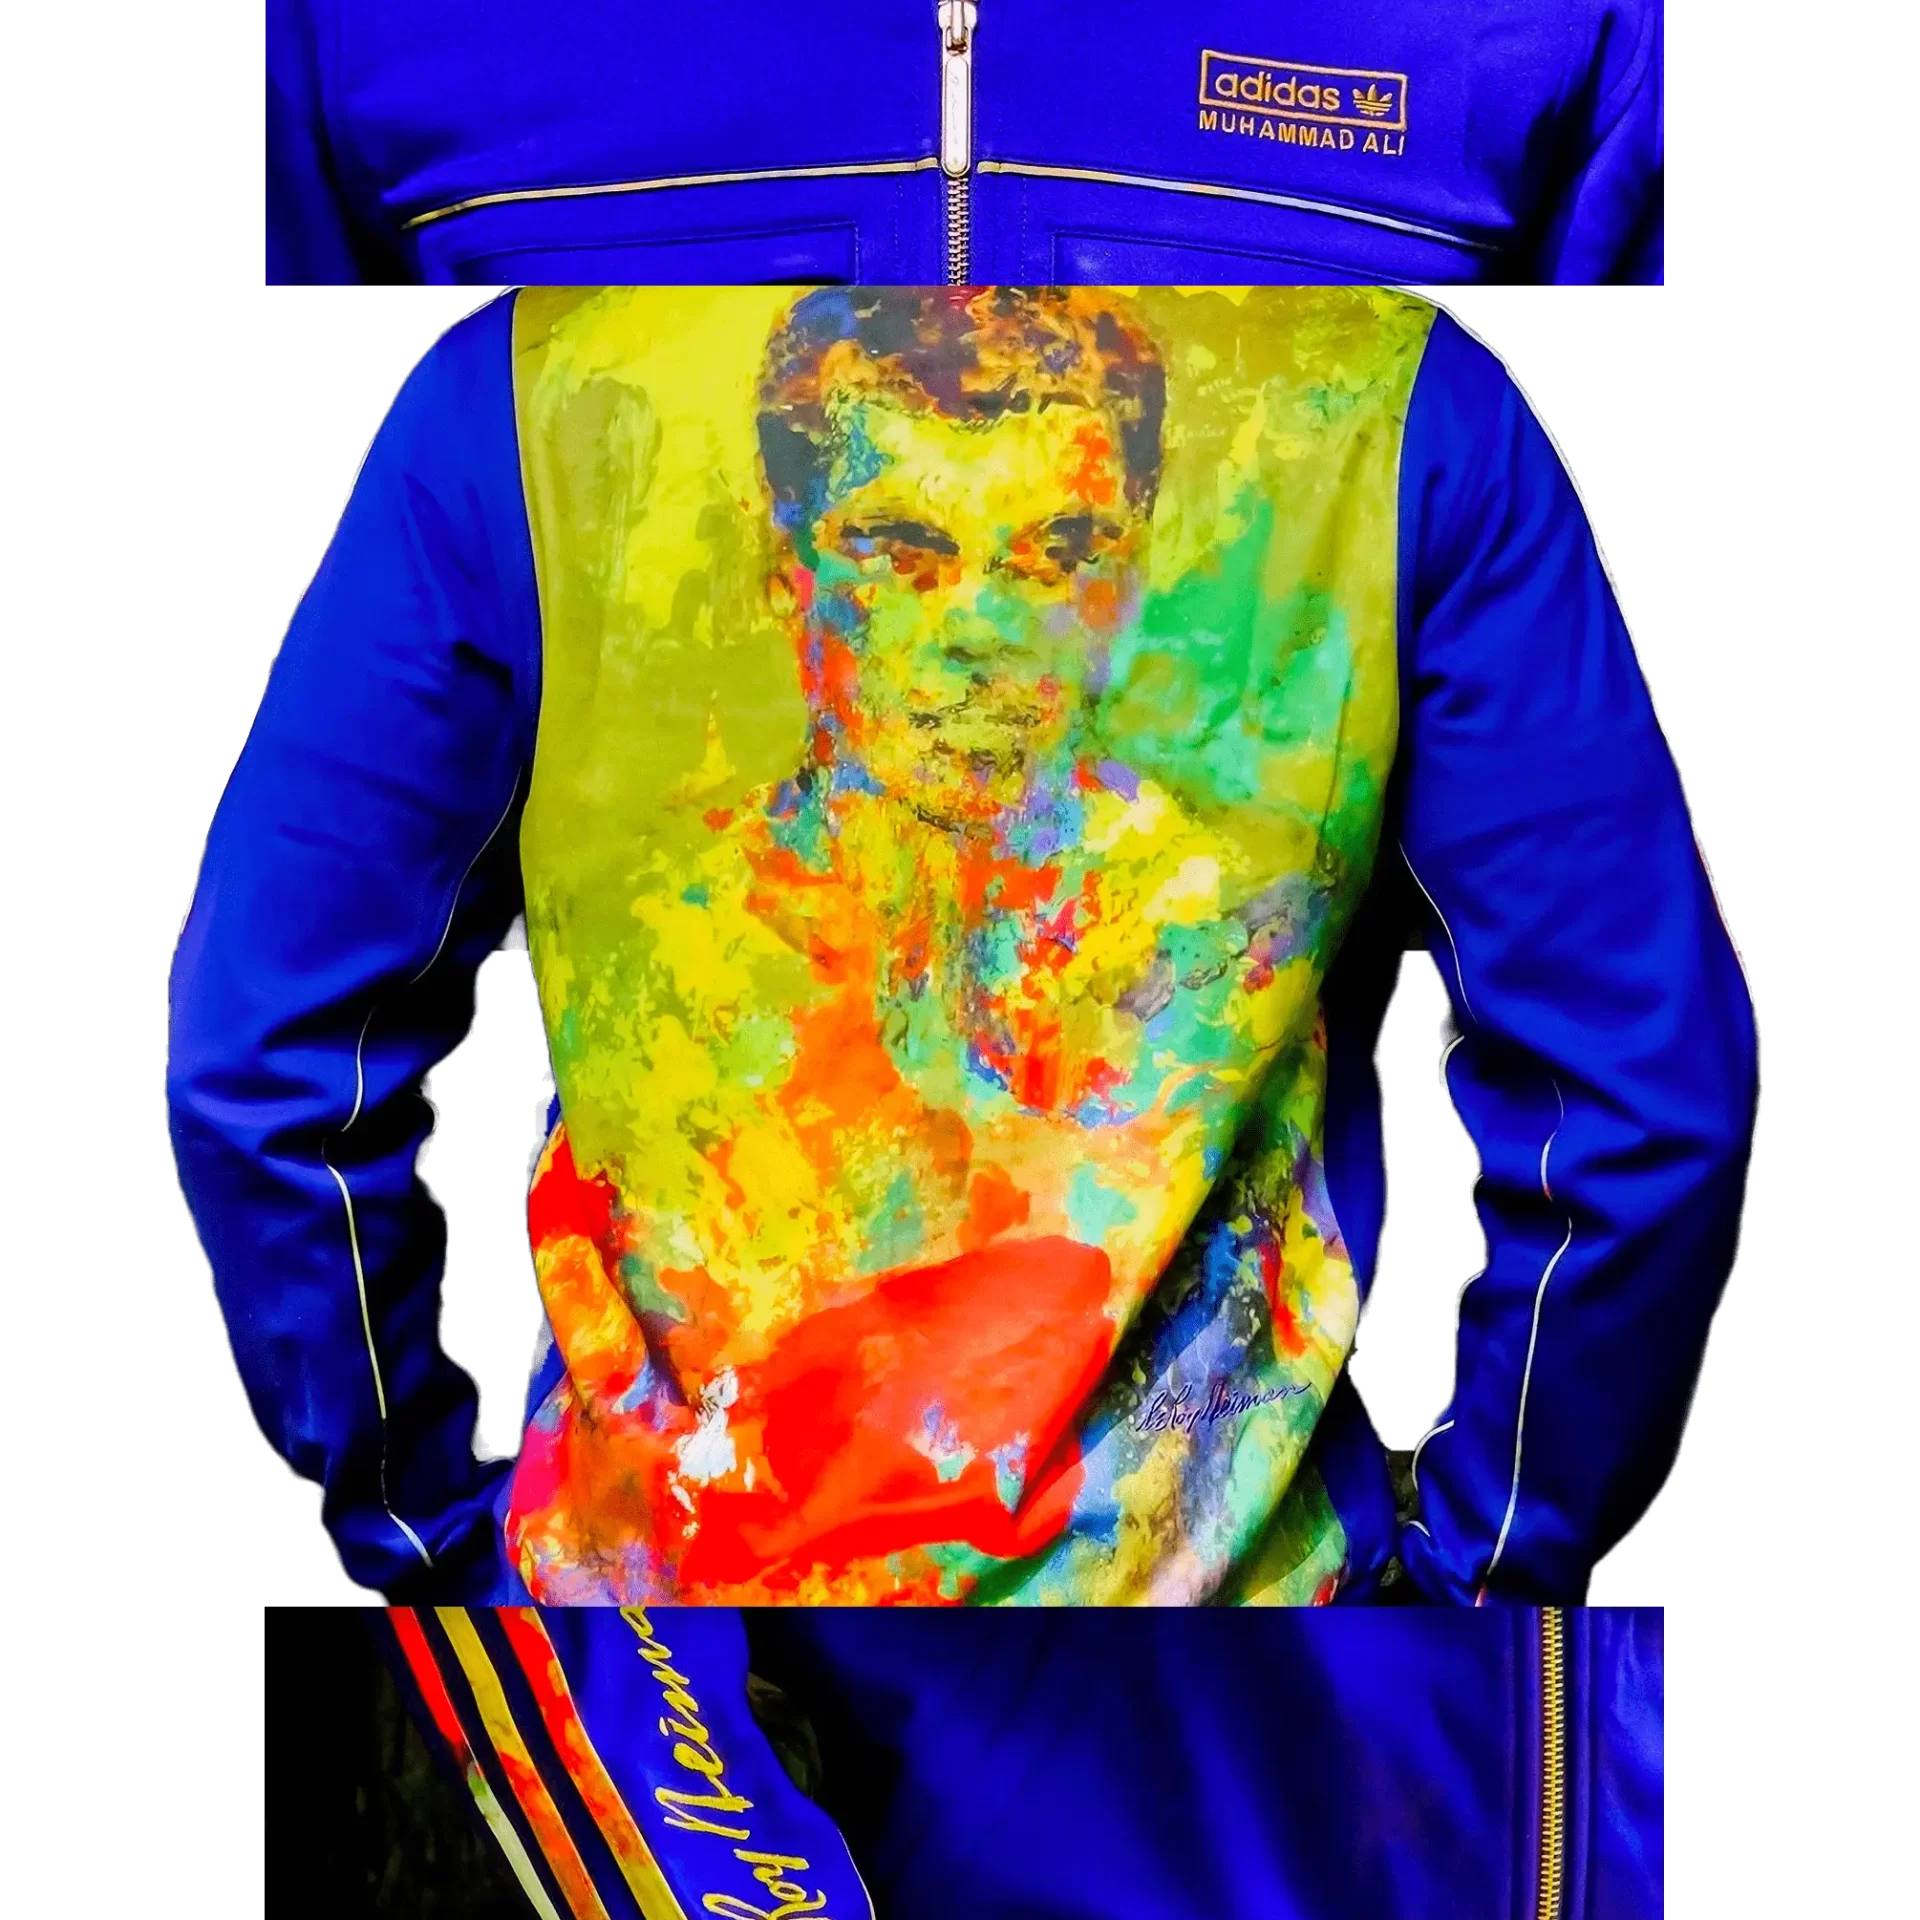 Men's 2007 Muhammad Ali Respect TT by Adidas: Pioneering (EnLawded.com file #lmchk78604ip2y124870kg9st)